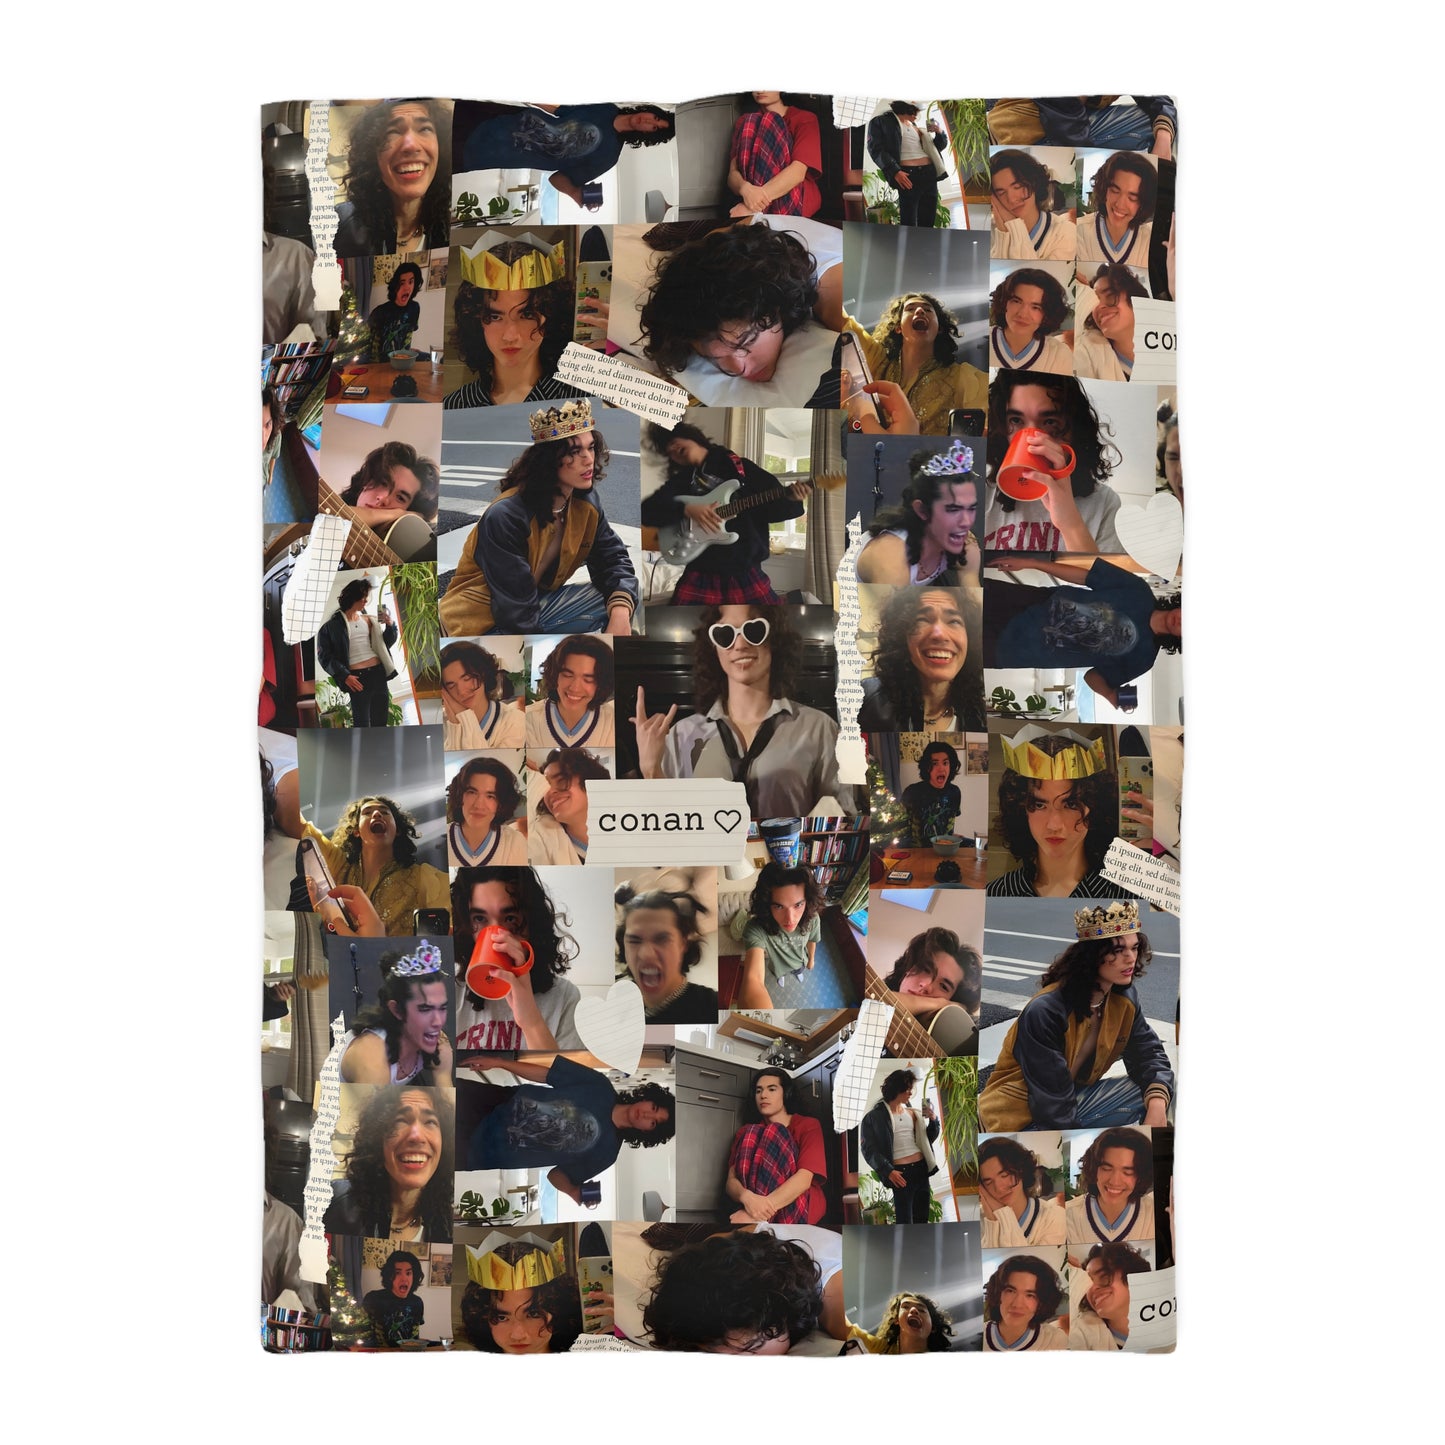 Conan Grey Being Cute Photo Collage Microfiber Duvet Cover